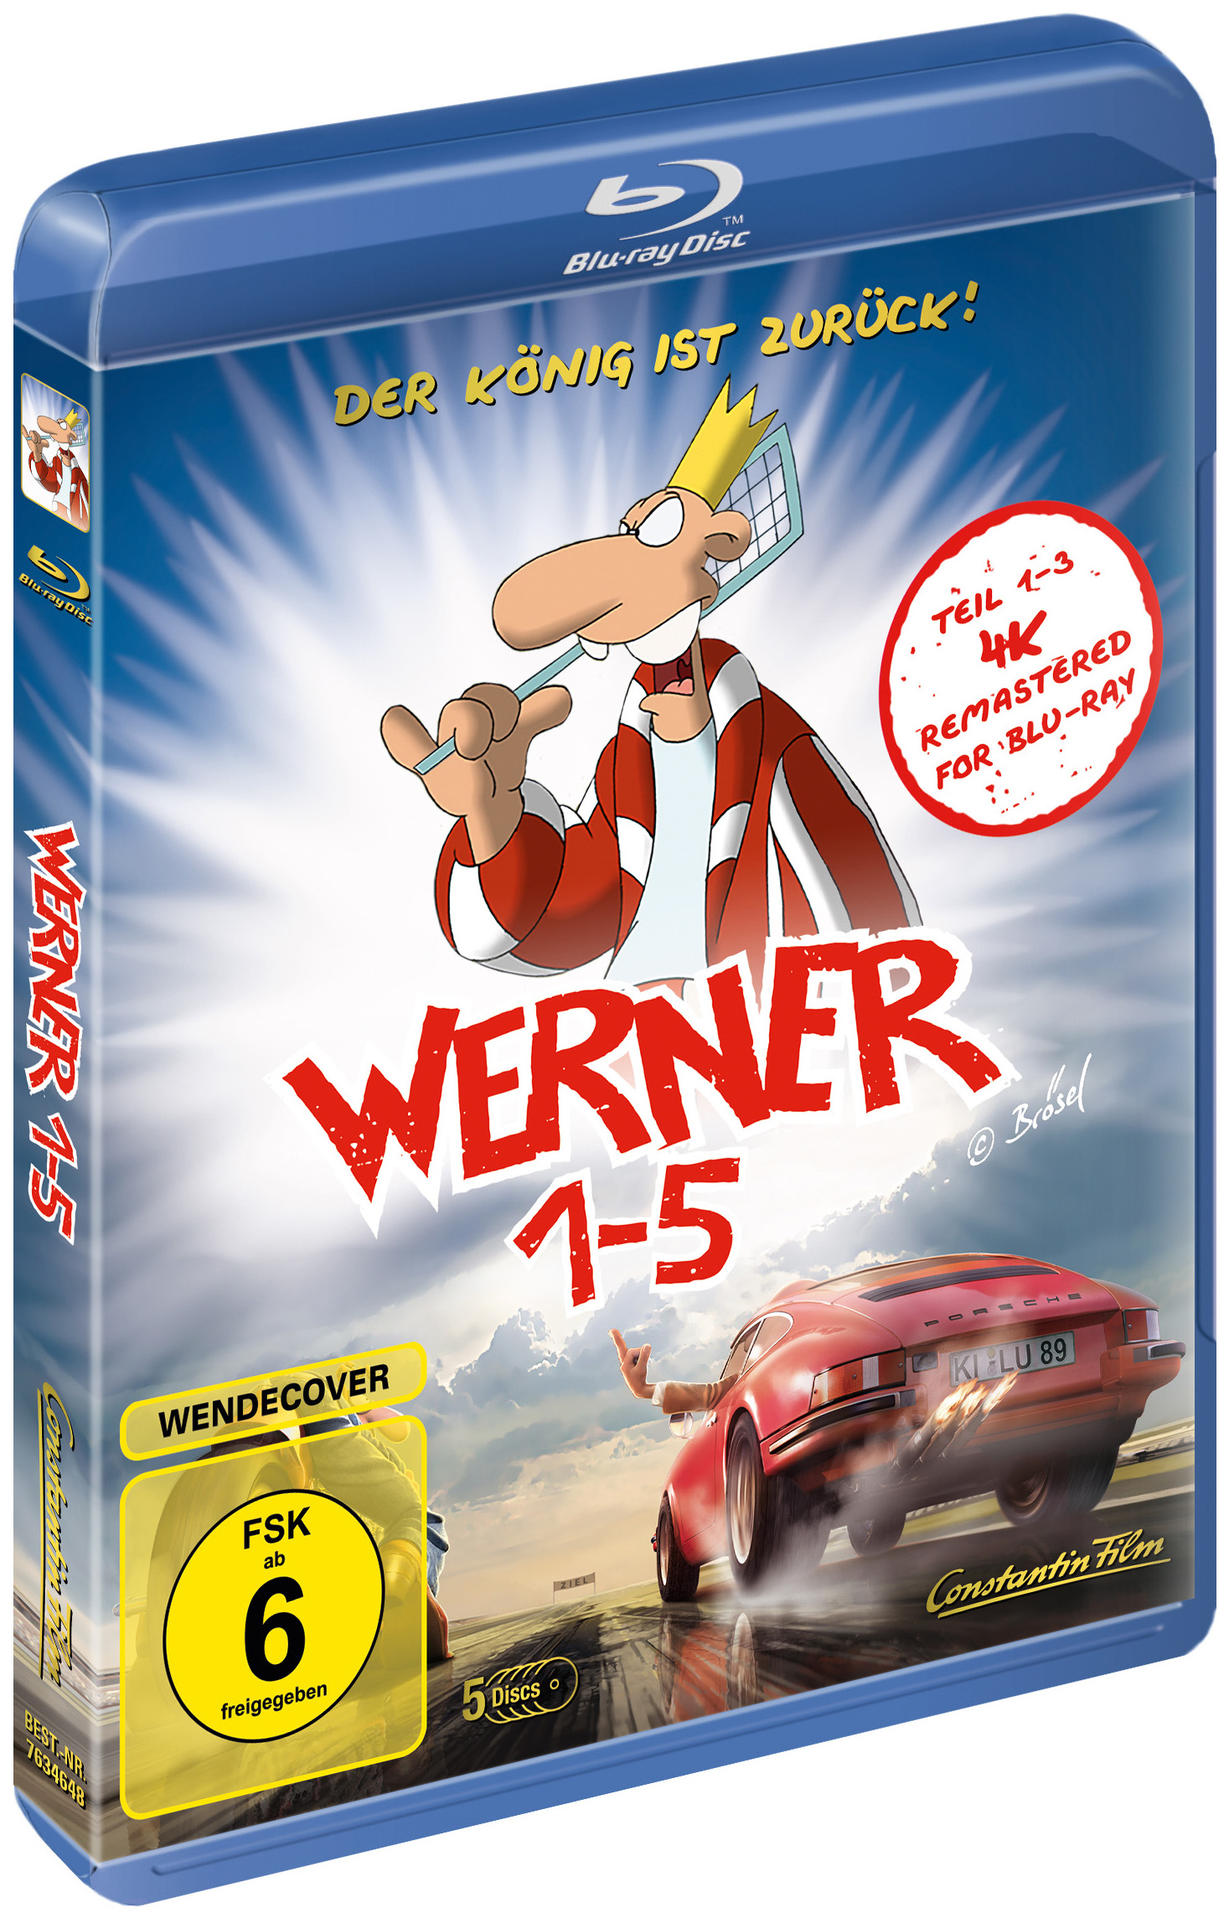 Werner 1-5 Blu-ray Königbox